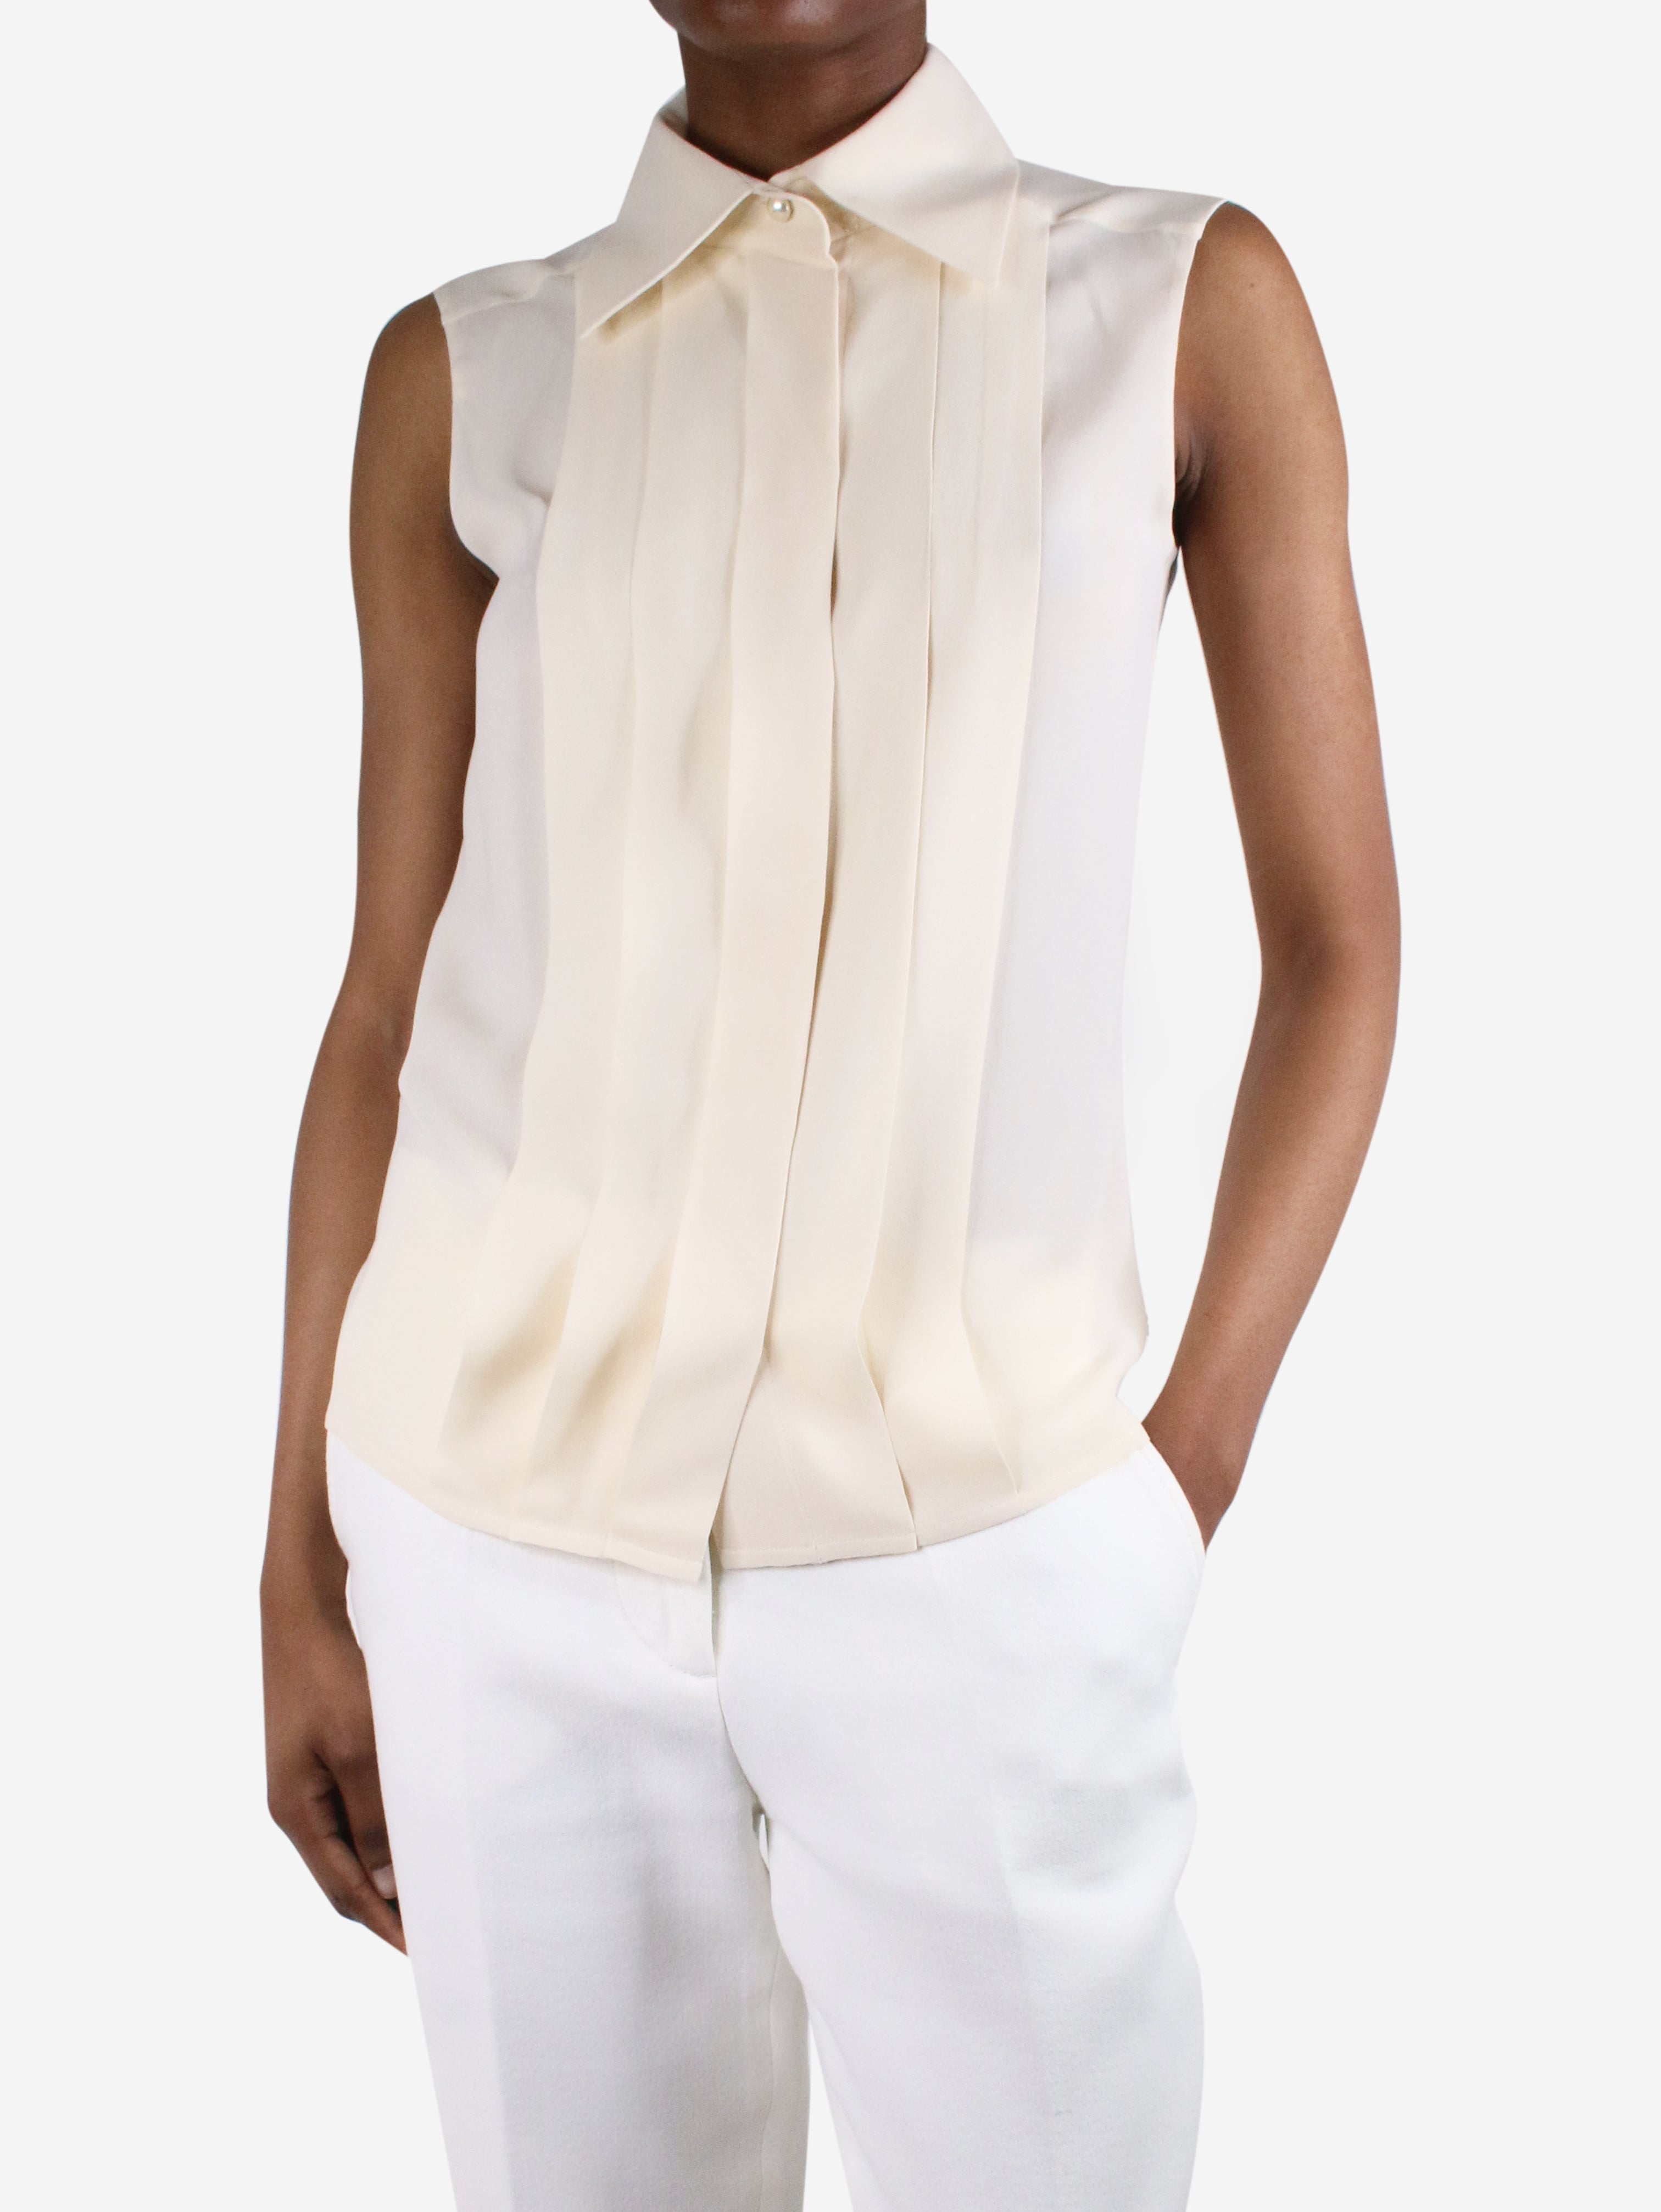 Chanel pre-owned cream sleeveless silk blouse.